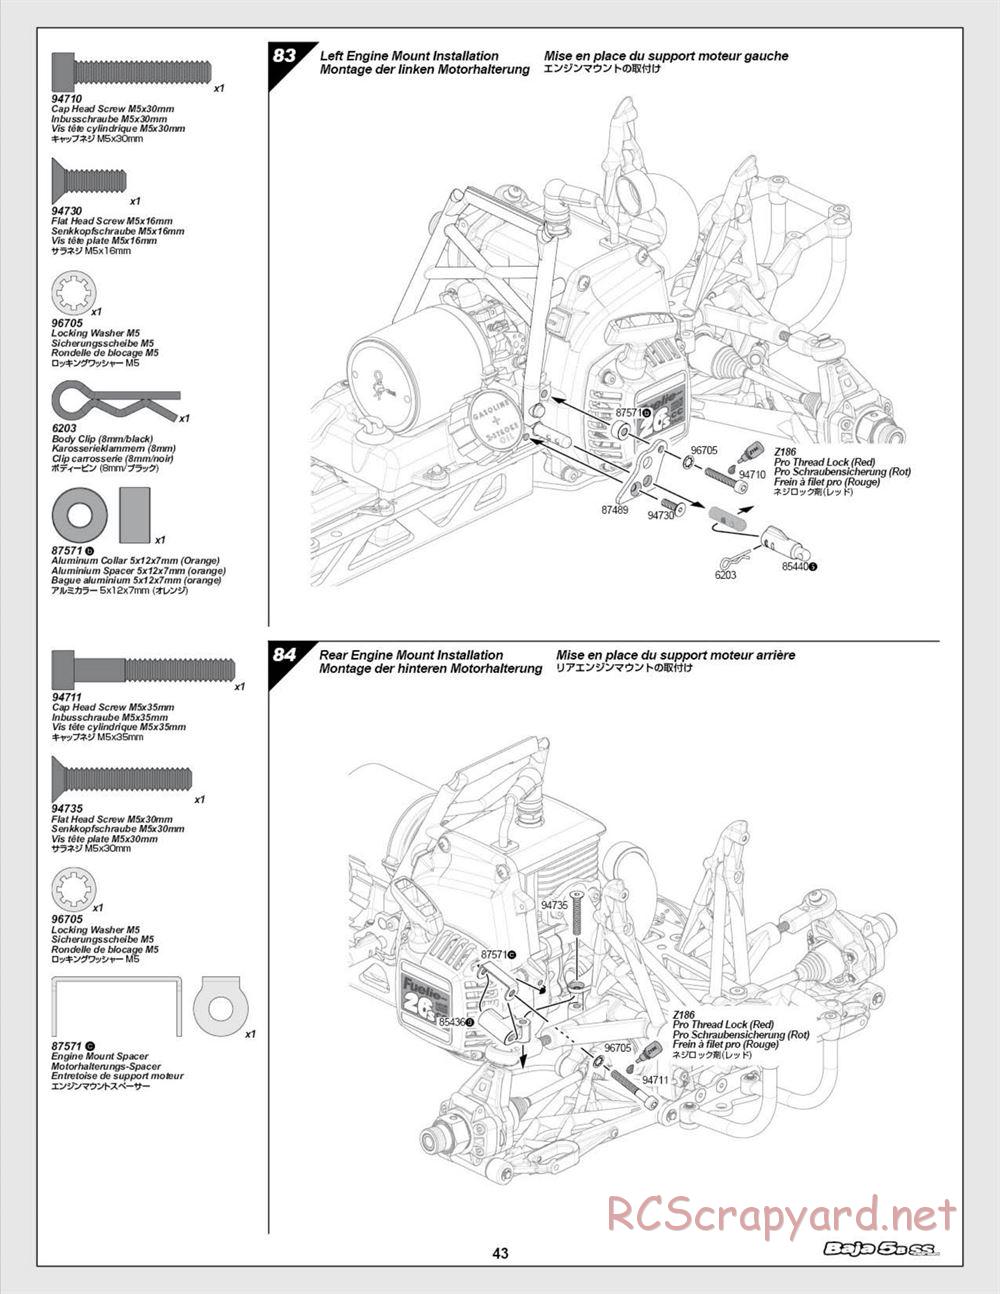 HPI - Baja 5b SS - Manual - Page 43